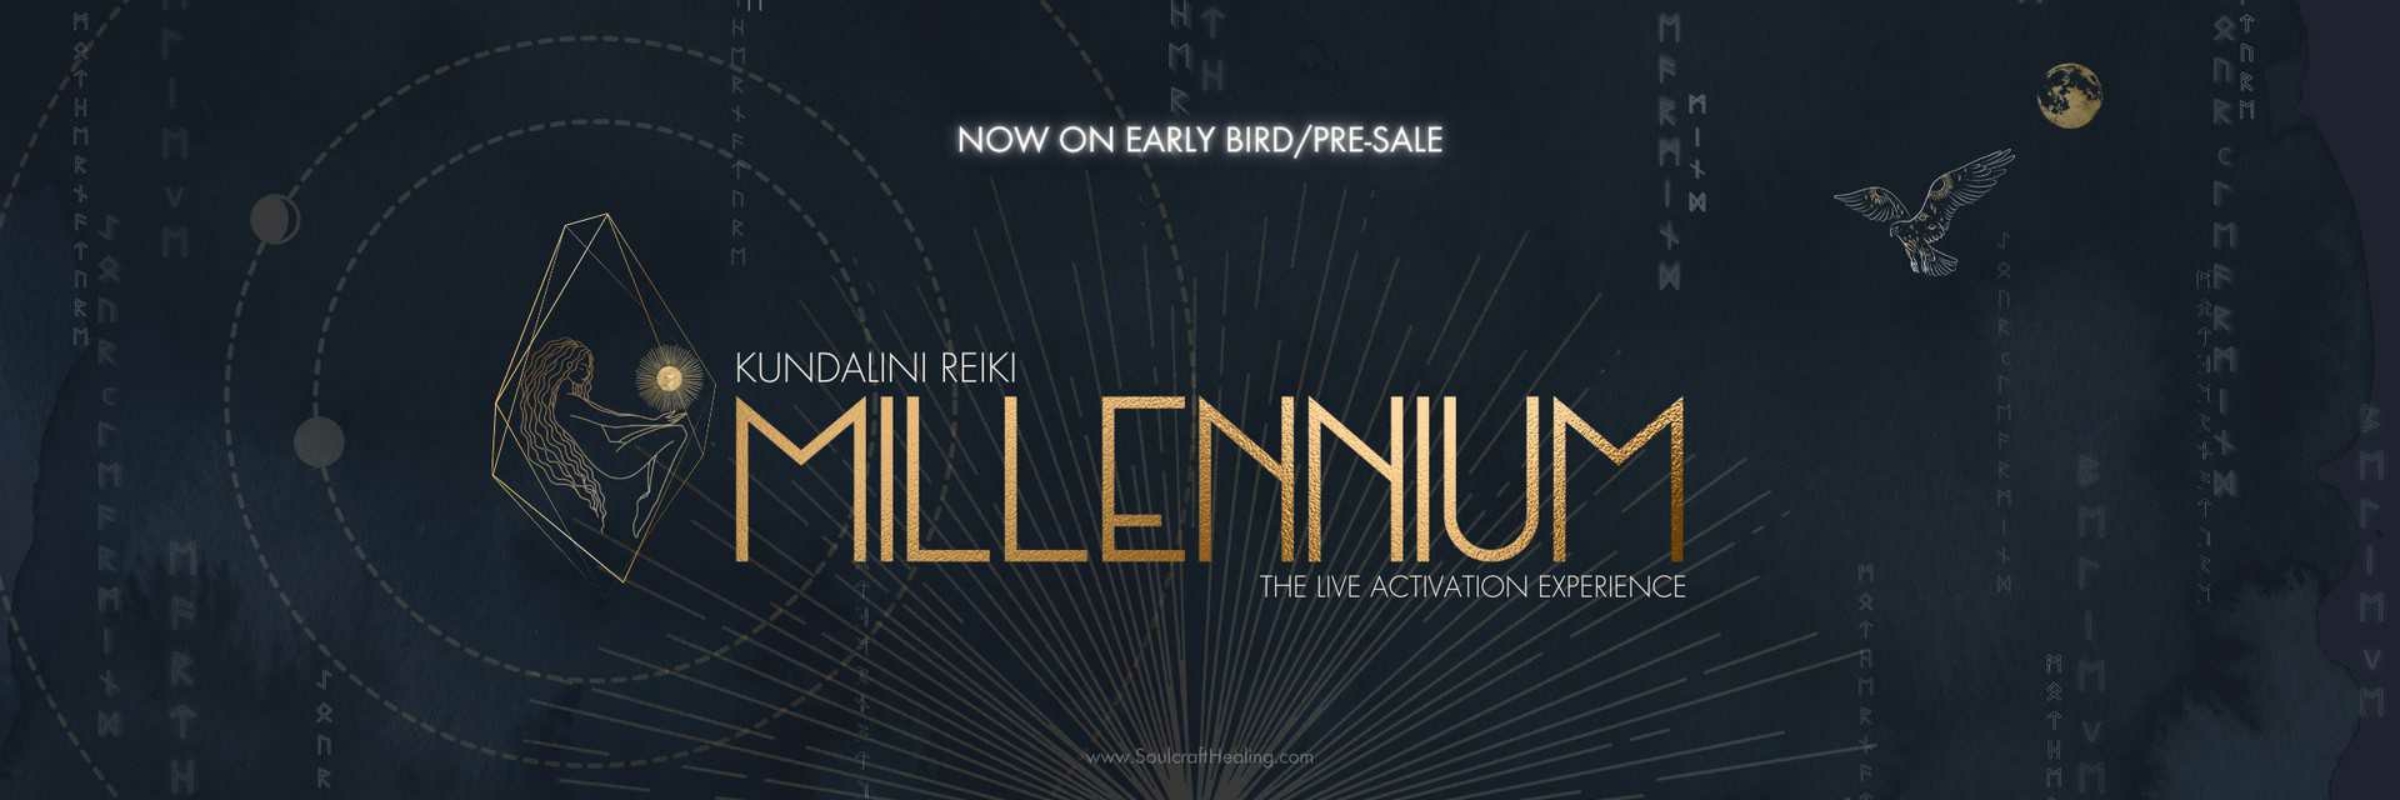 Kundalini Reiki Millennium Master Certification - The Live Experience